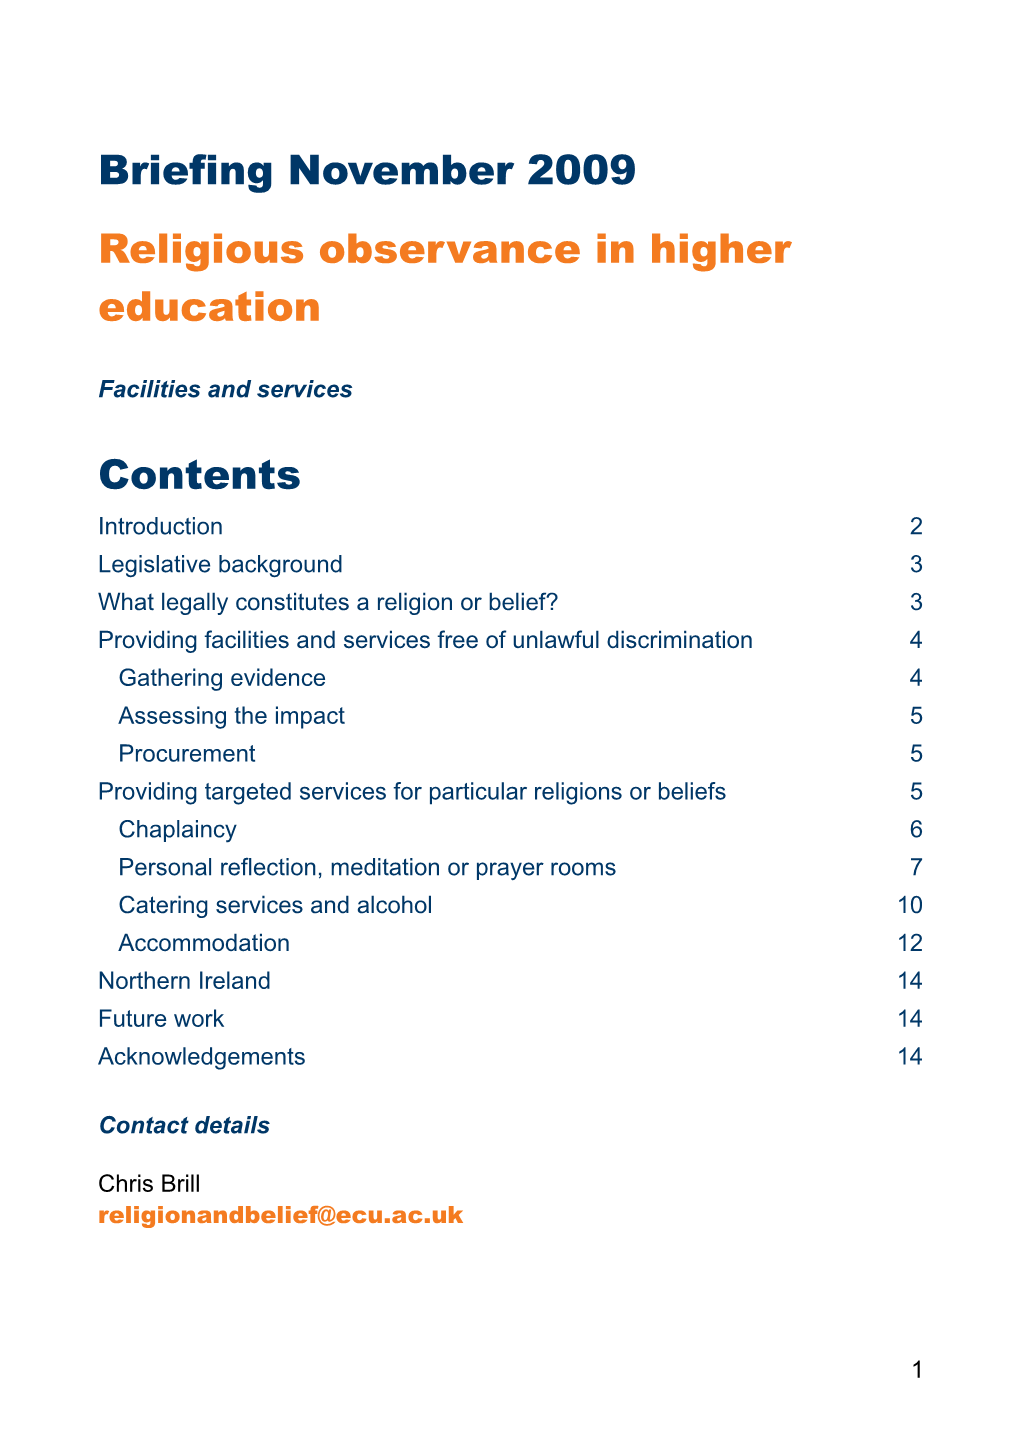 Religious Observance in Higher Education